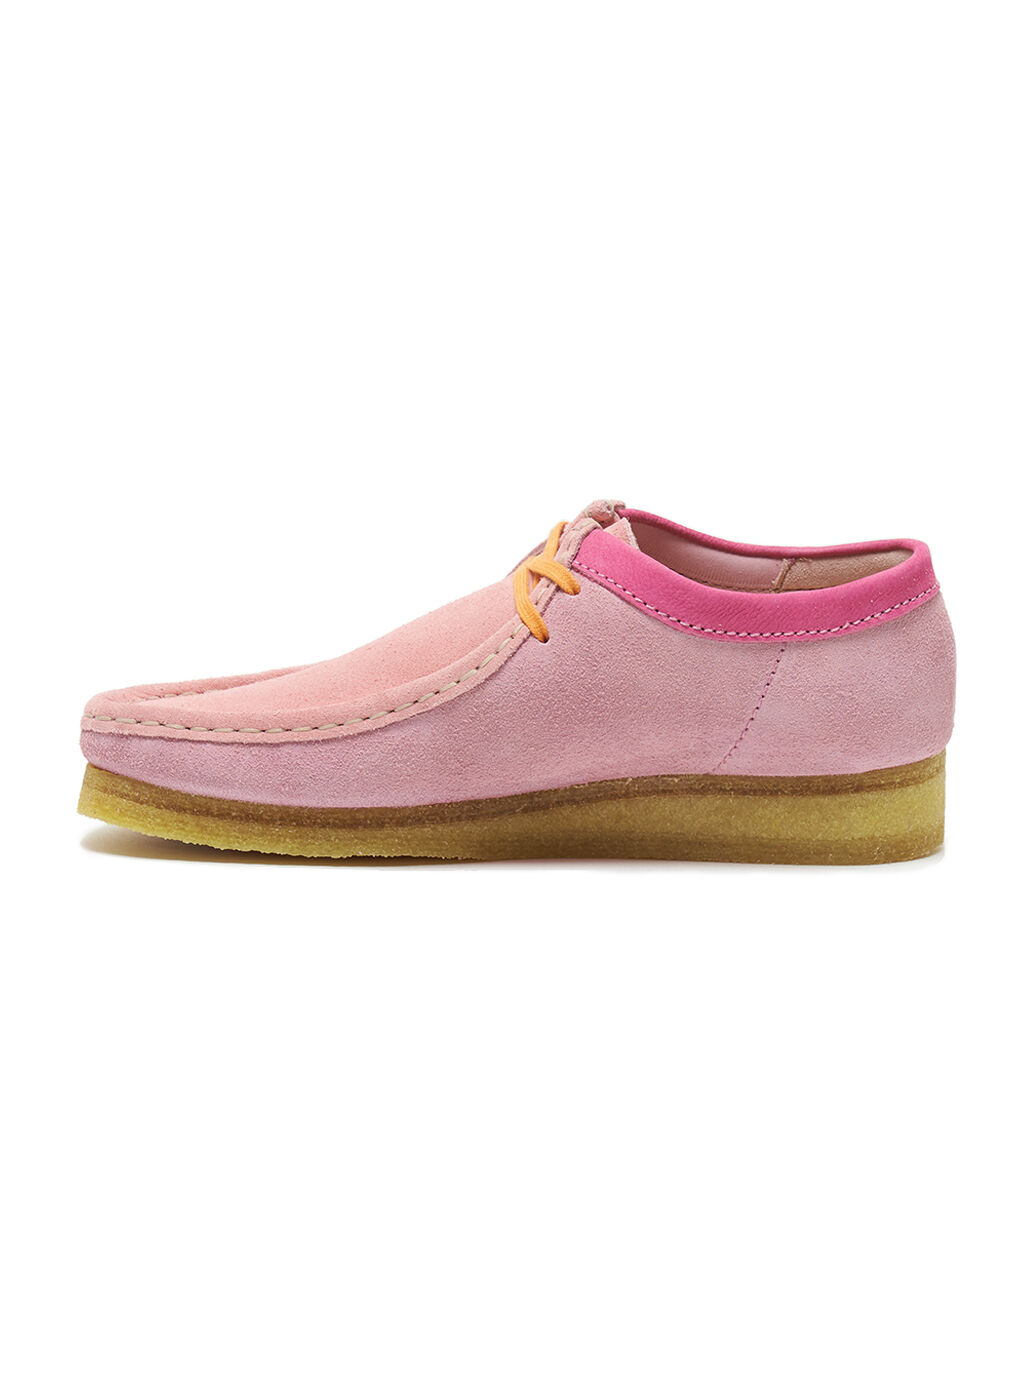 Levi’s® Vintage Clothing x Clarks Originals® Wallabee Pink Combination